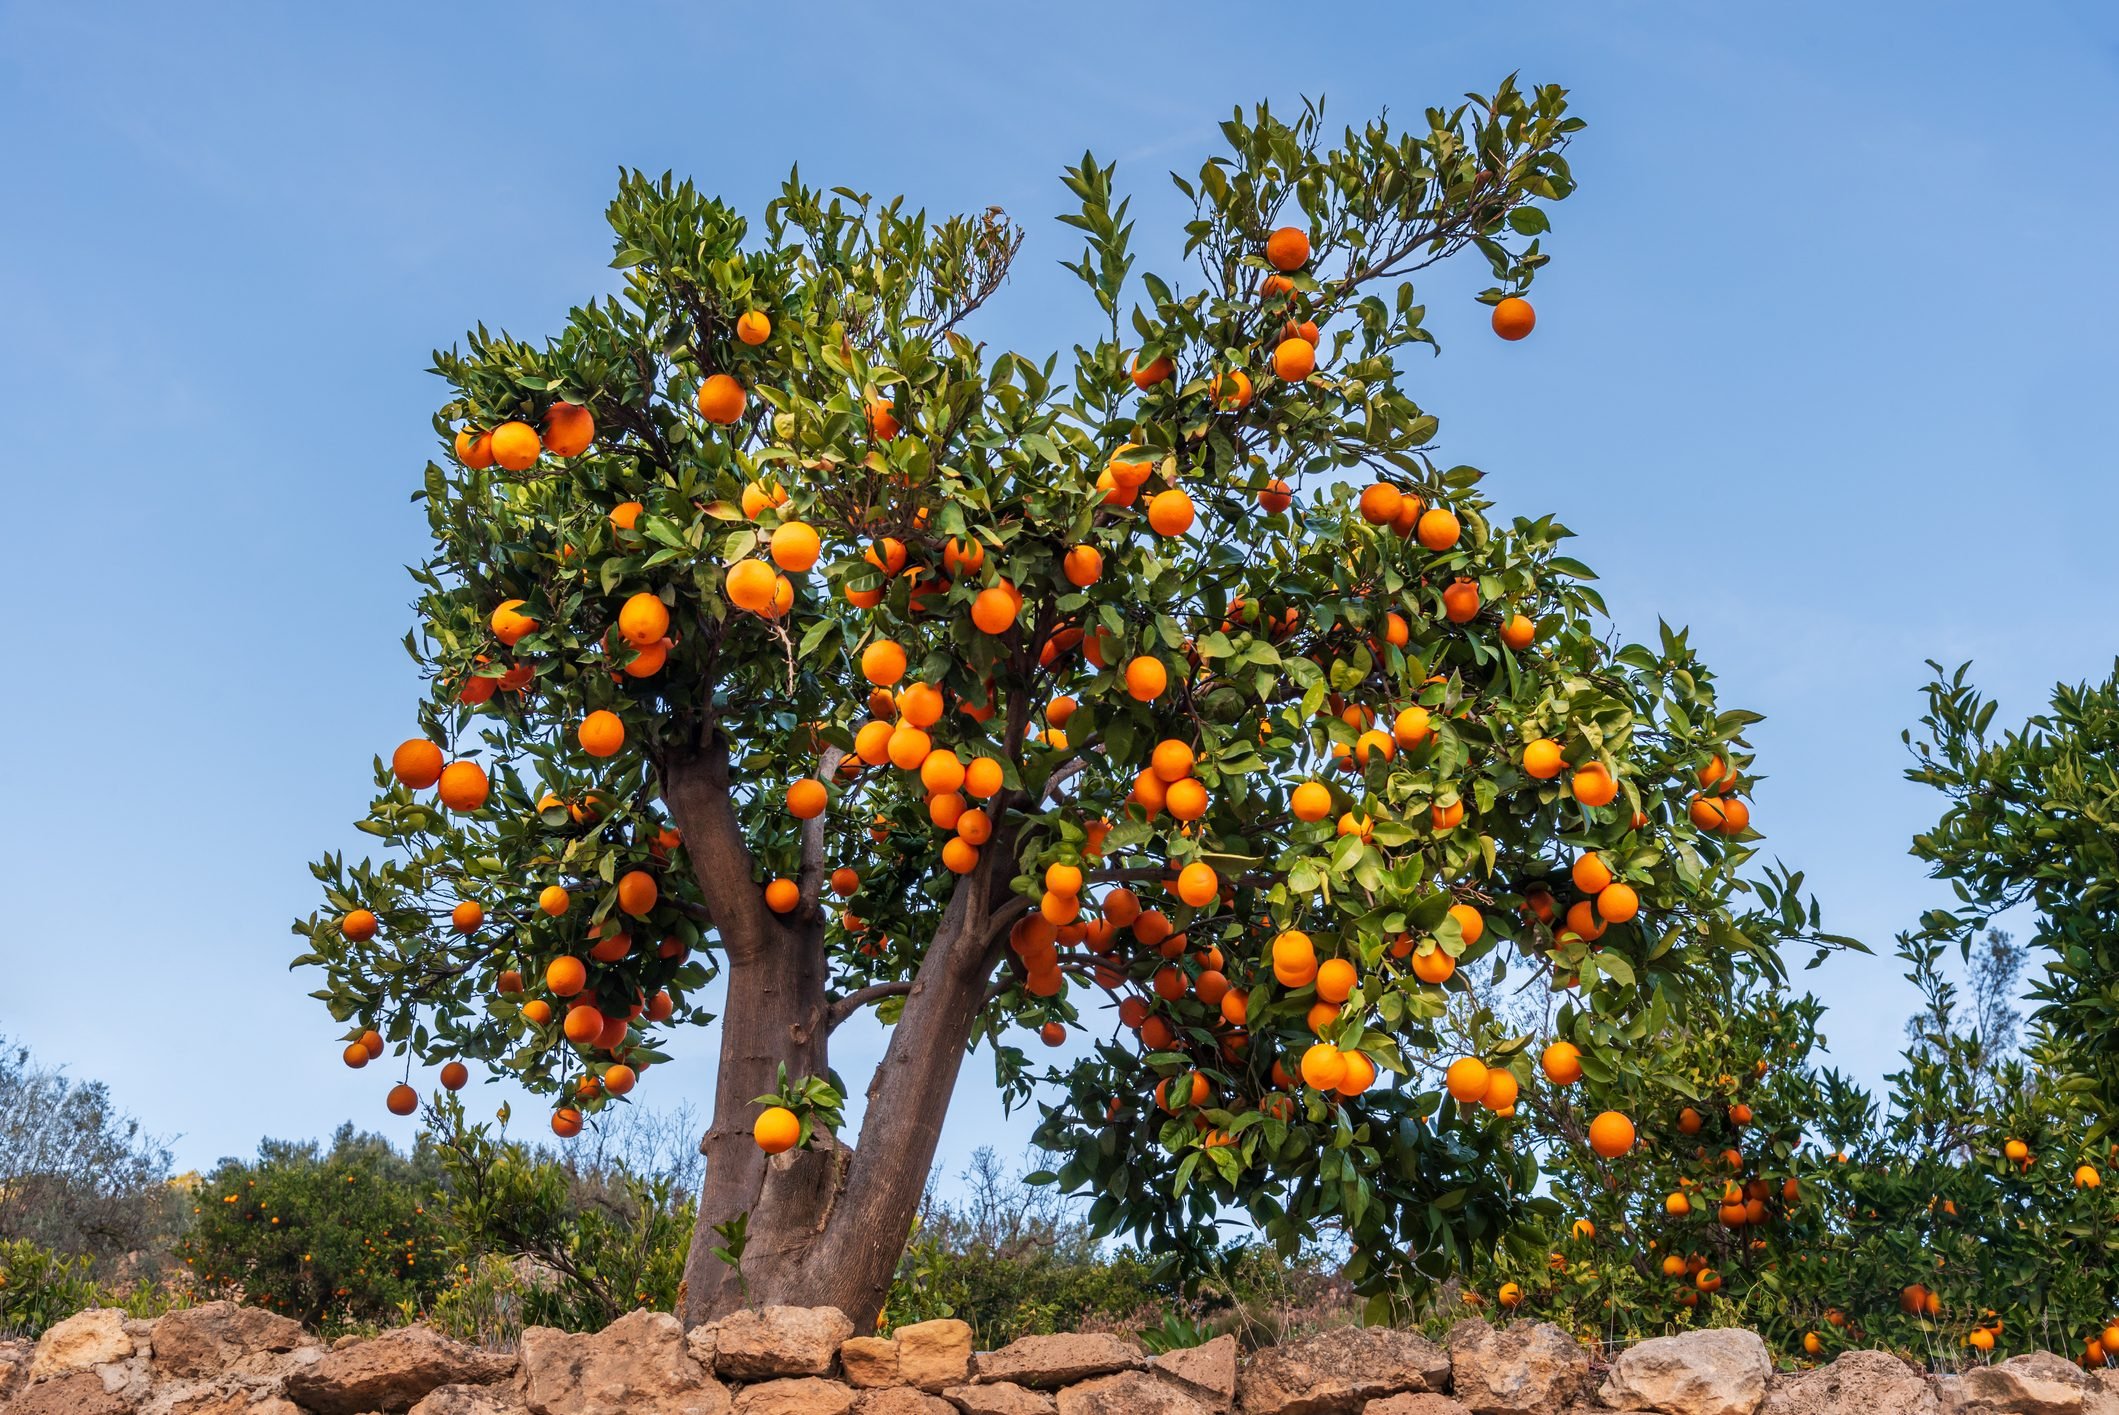 Orange tree full of ripe oranges ready for harvesting, close-up.